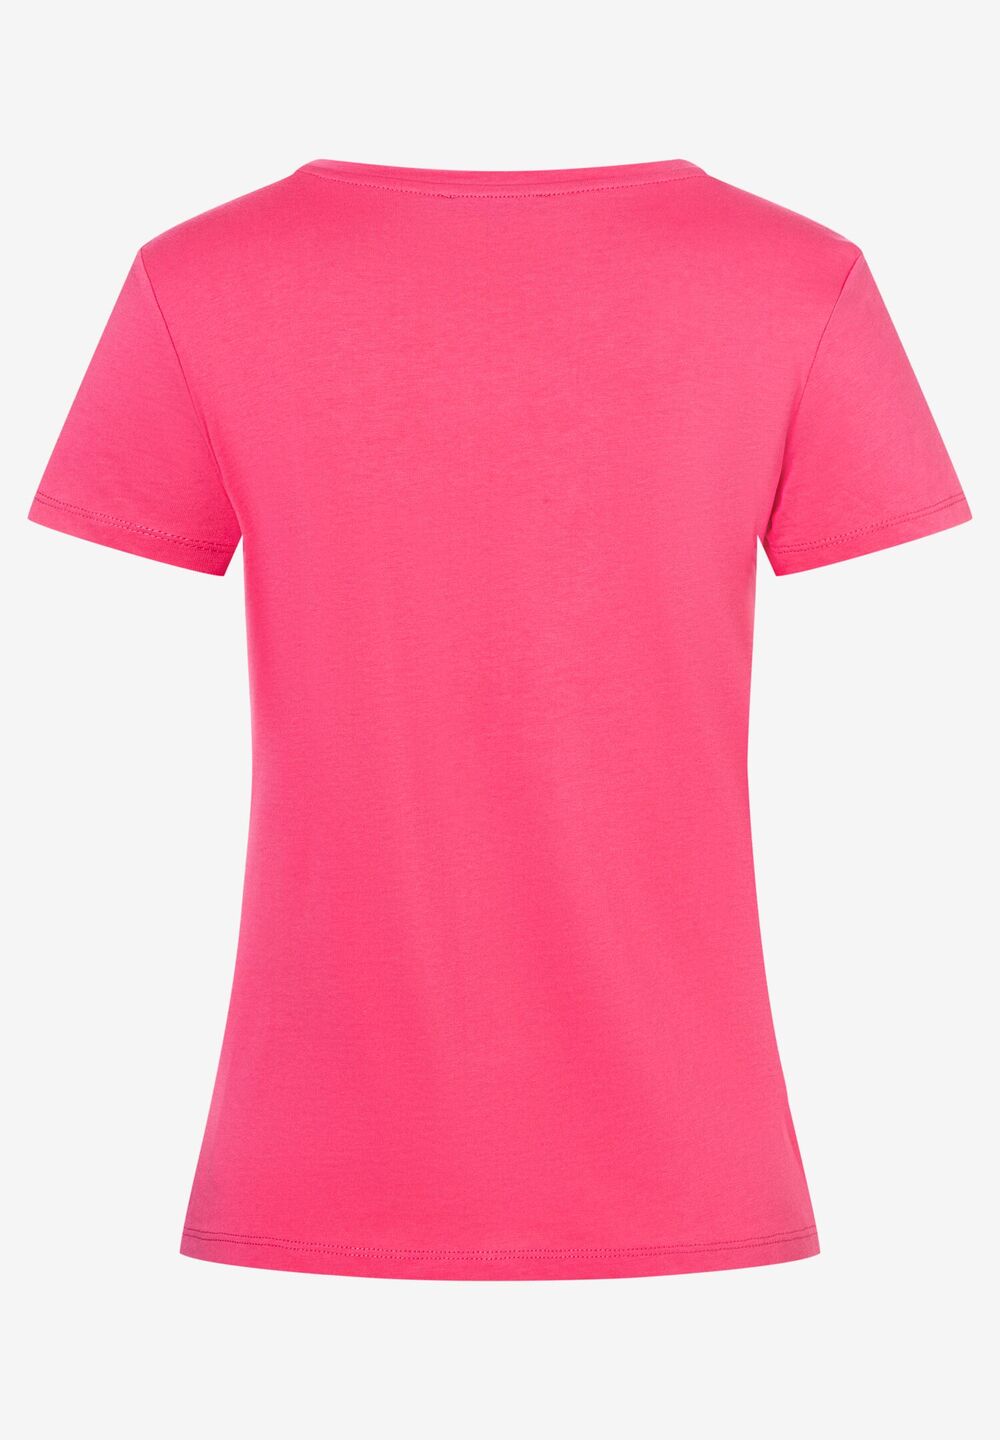 T-Shirt, pinkrose, Frühjahrs-Kollektion, pink 